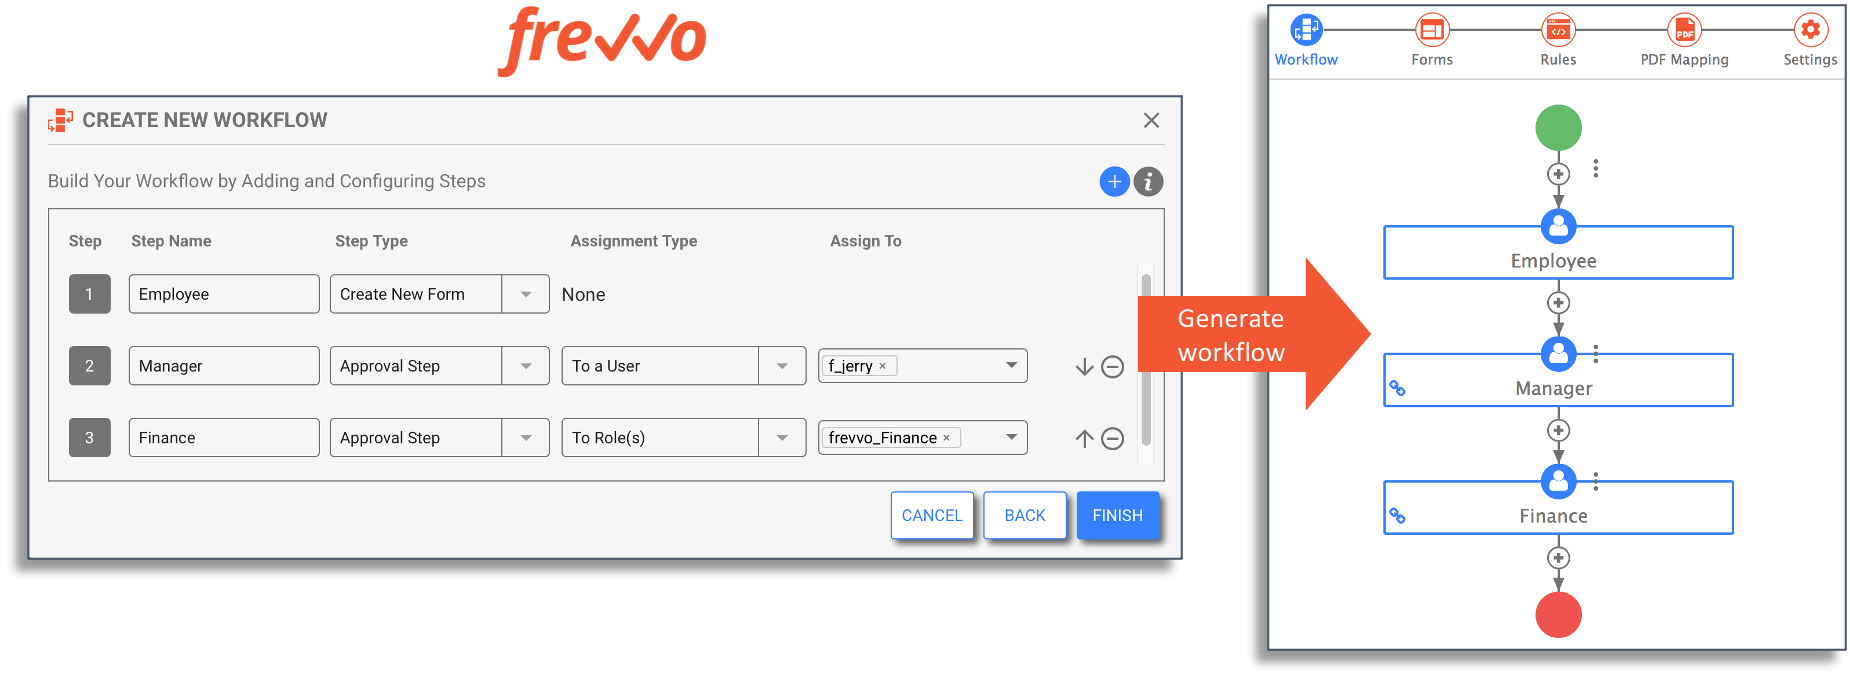 Using frevvo's workflow designer to design a custom workflow